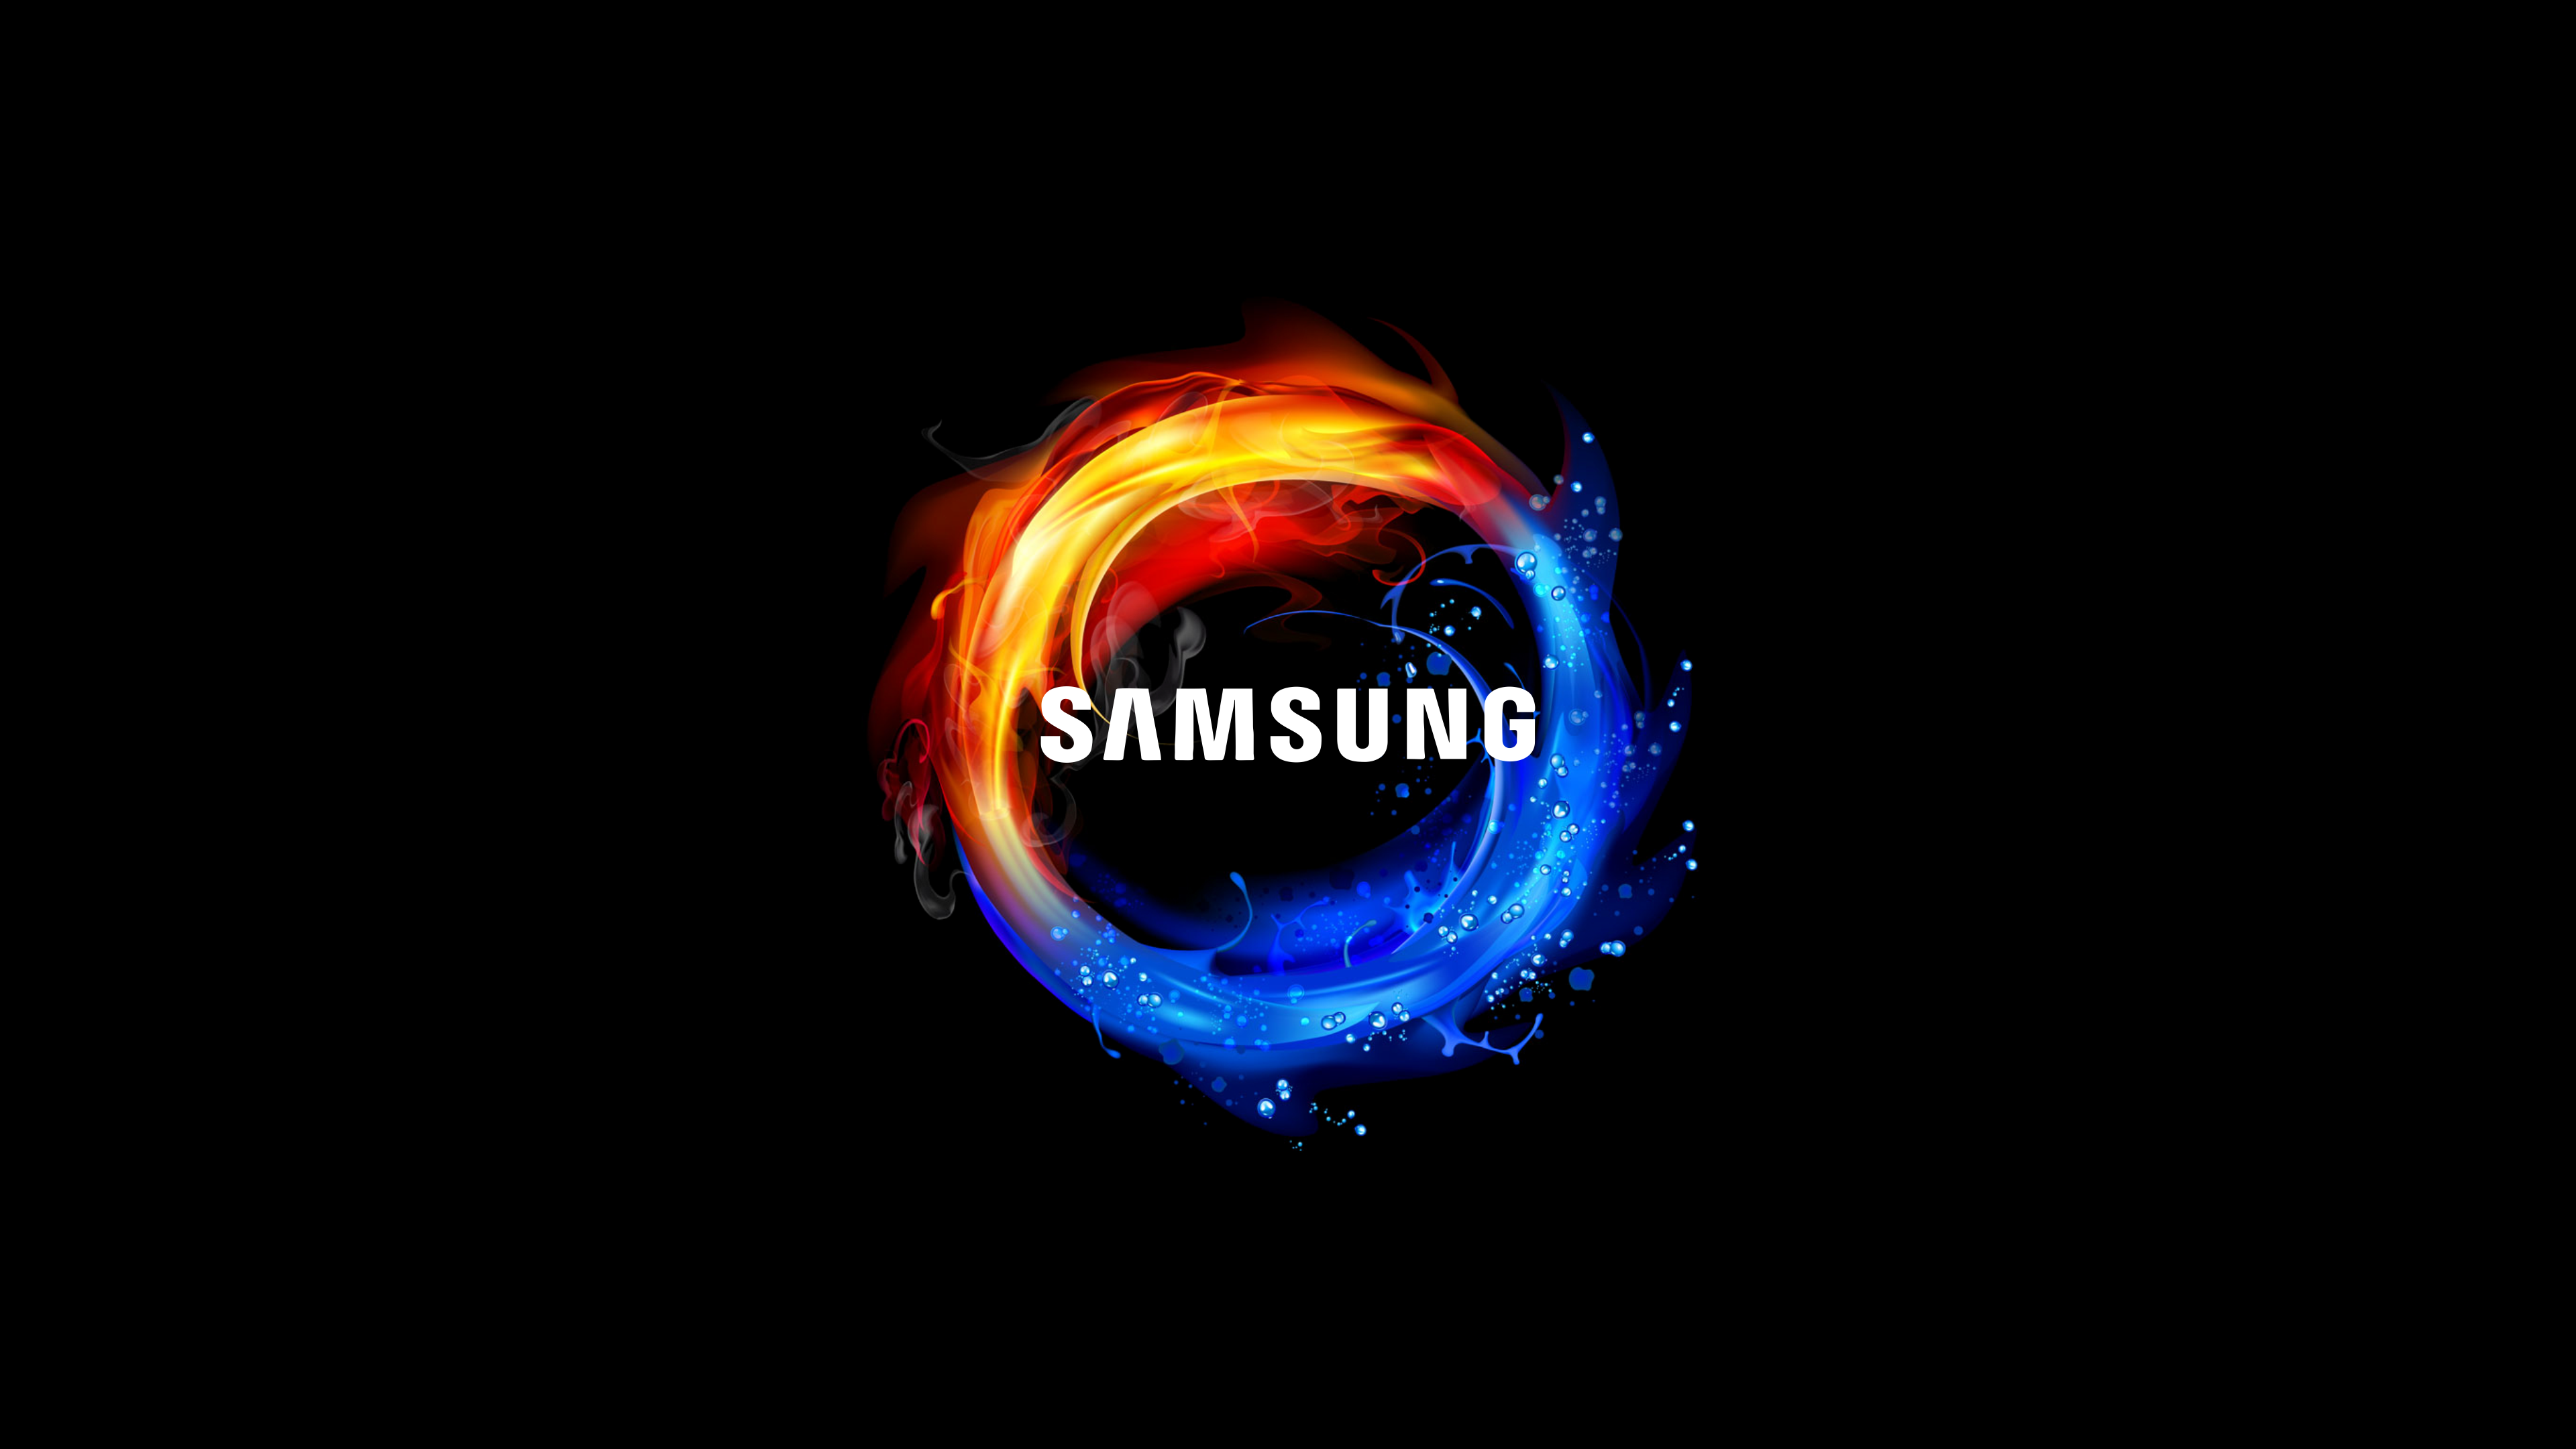 Samsung 4k Ultra HD Wallpaper by CPADESIGN